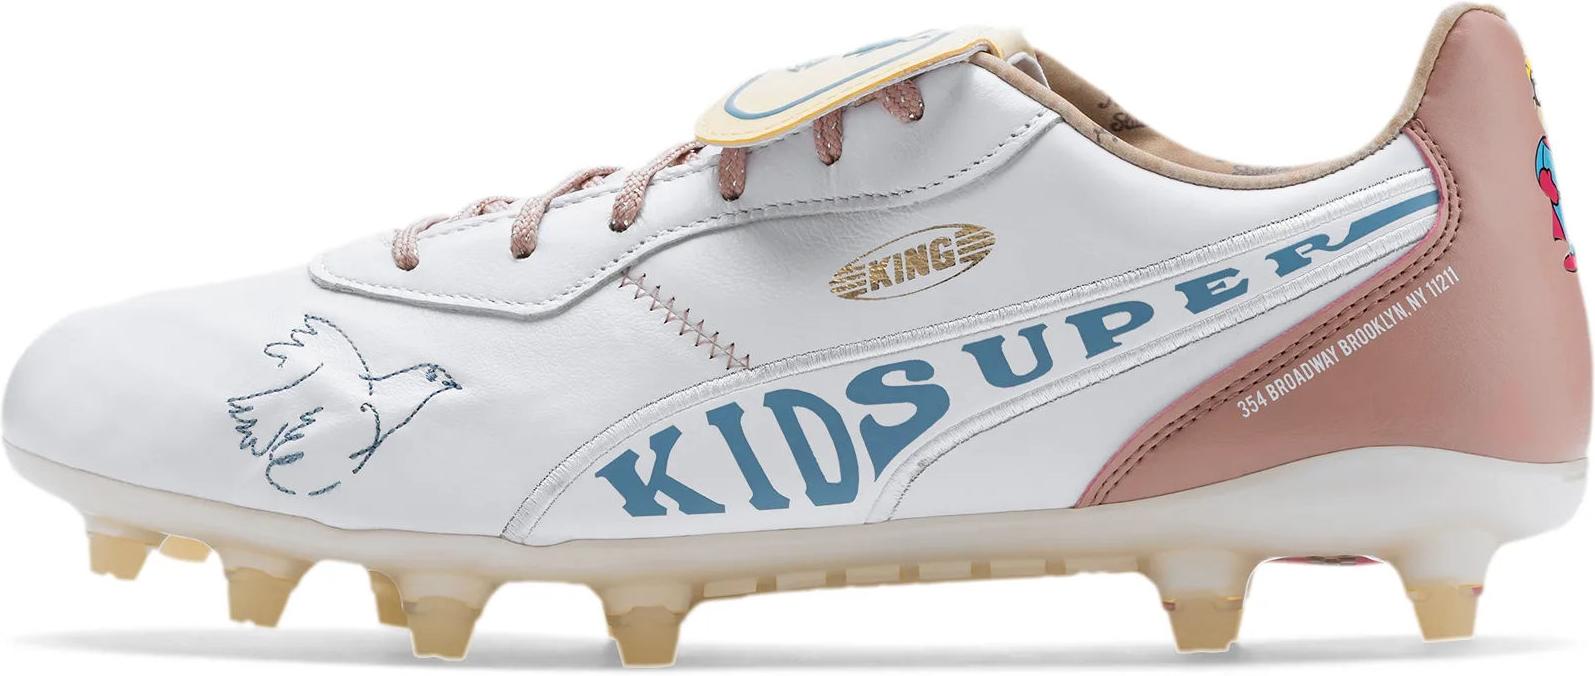 Football shoes Puma x KIDSUPER King Super FG